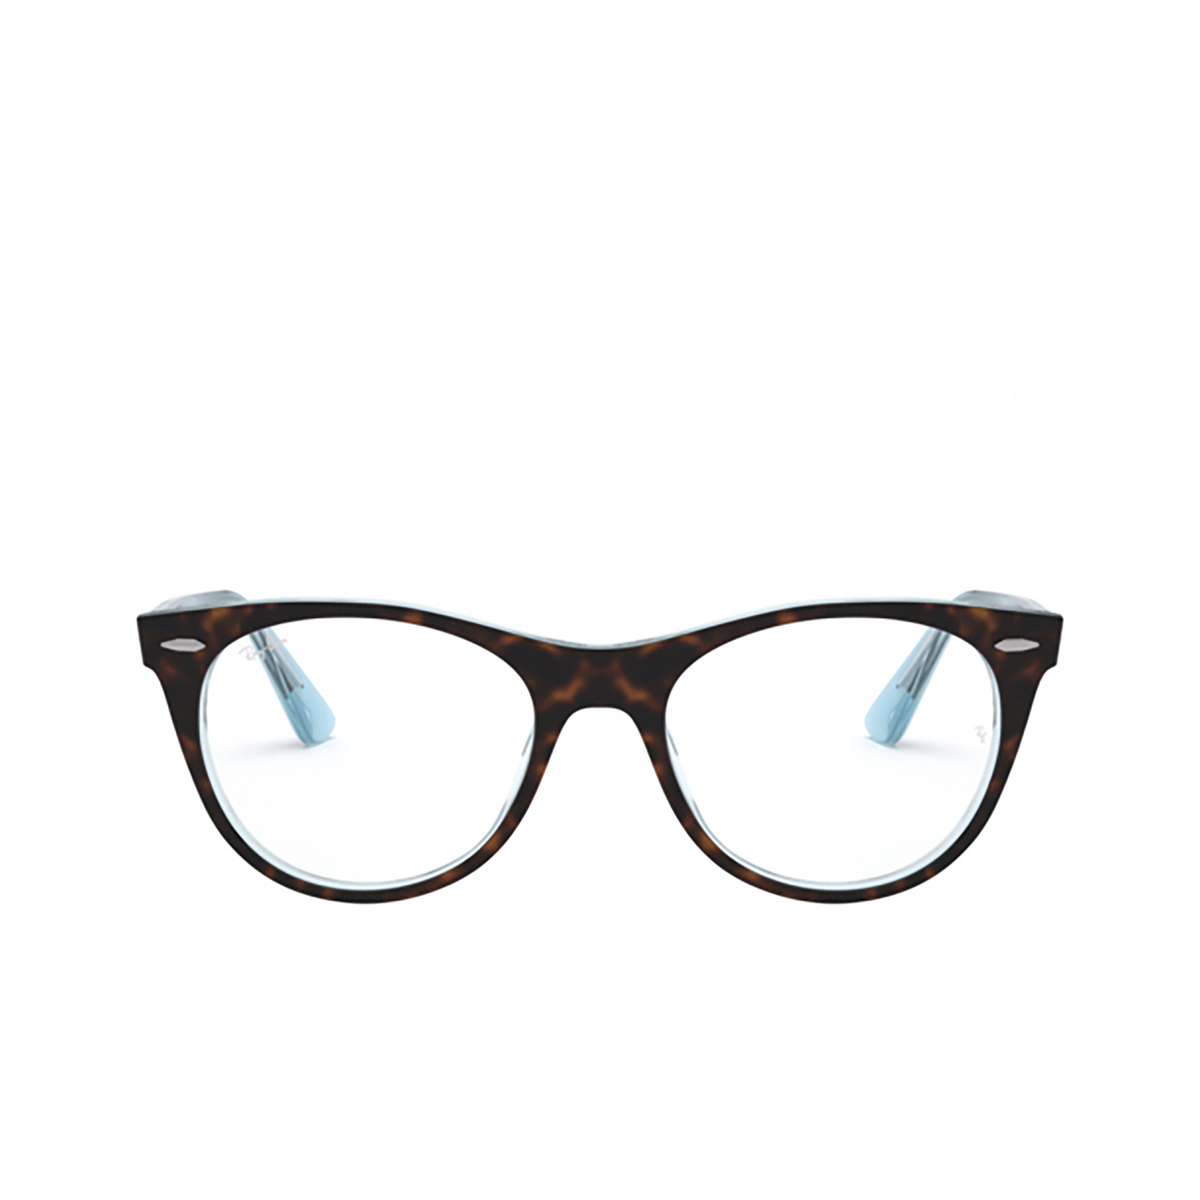 Ray-Ban WAYFARER II Eyeglasses 5883 TOP HAVANA ON LIGHT BLUE - front view